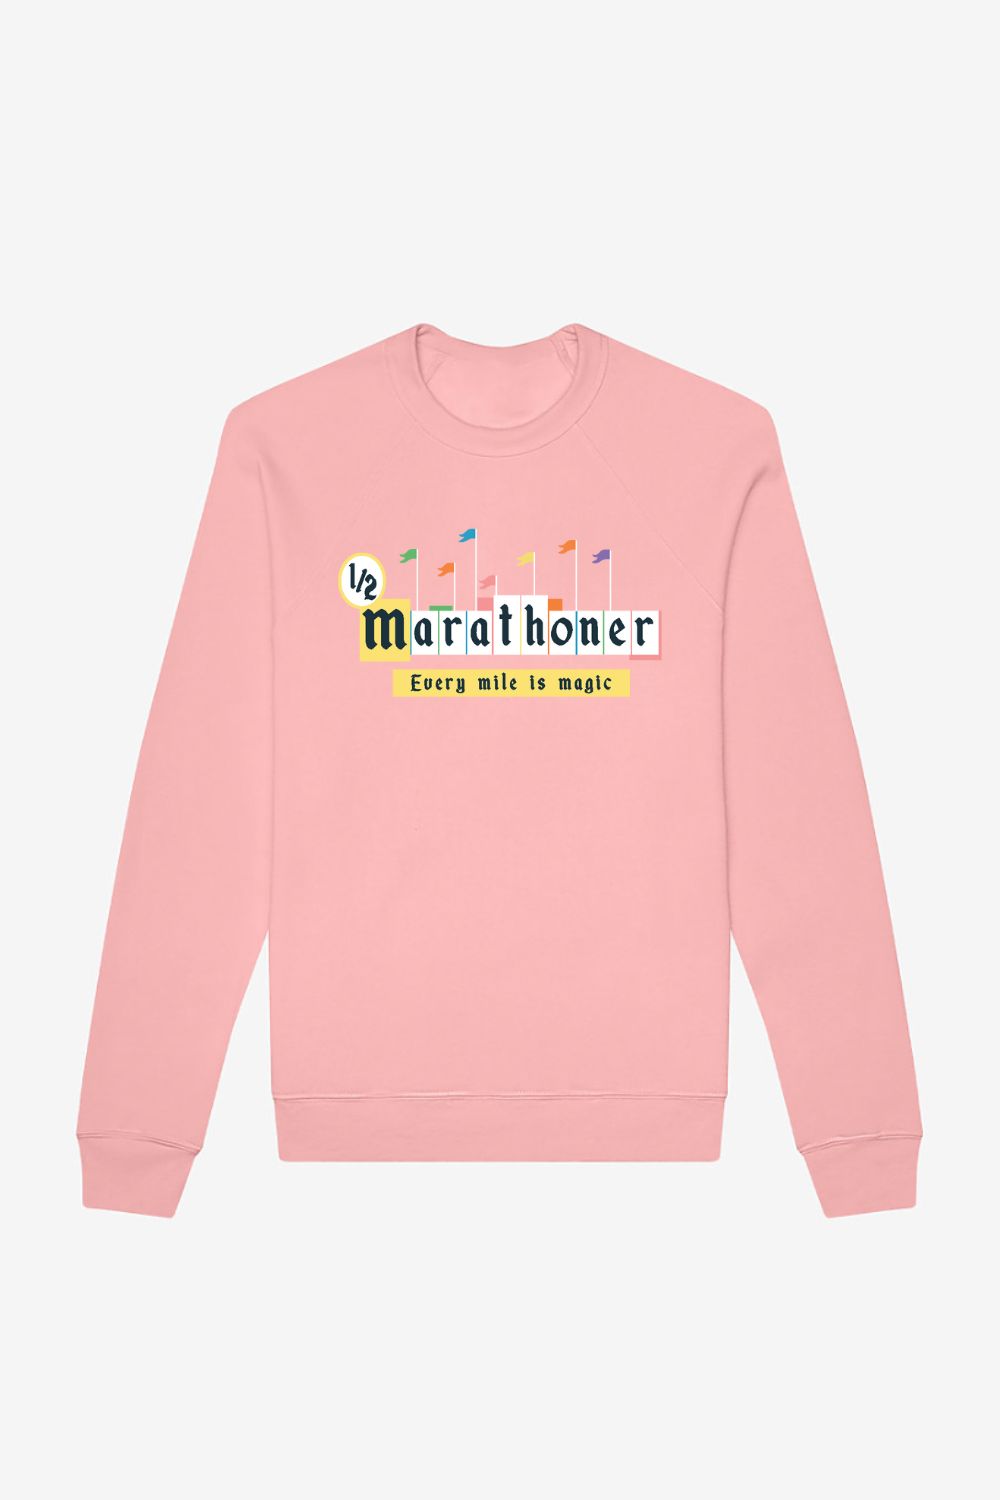 Disney Half Marathon Sweatshirt